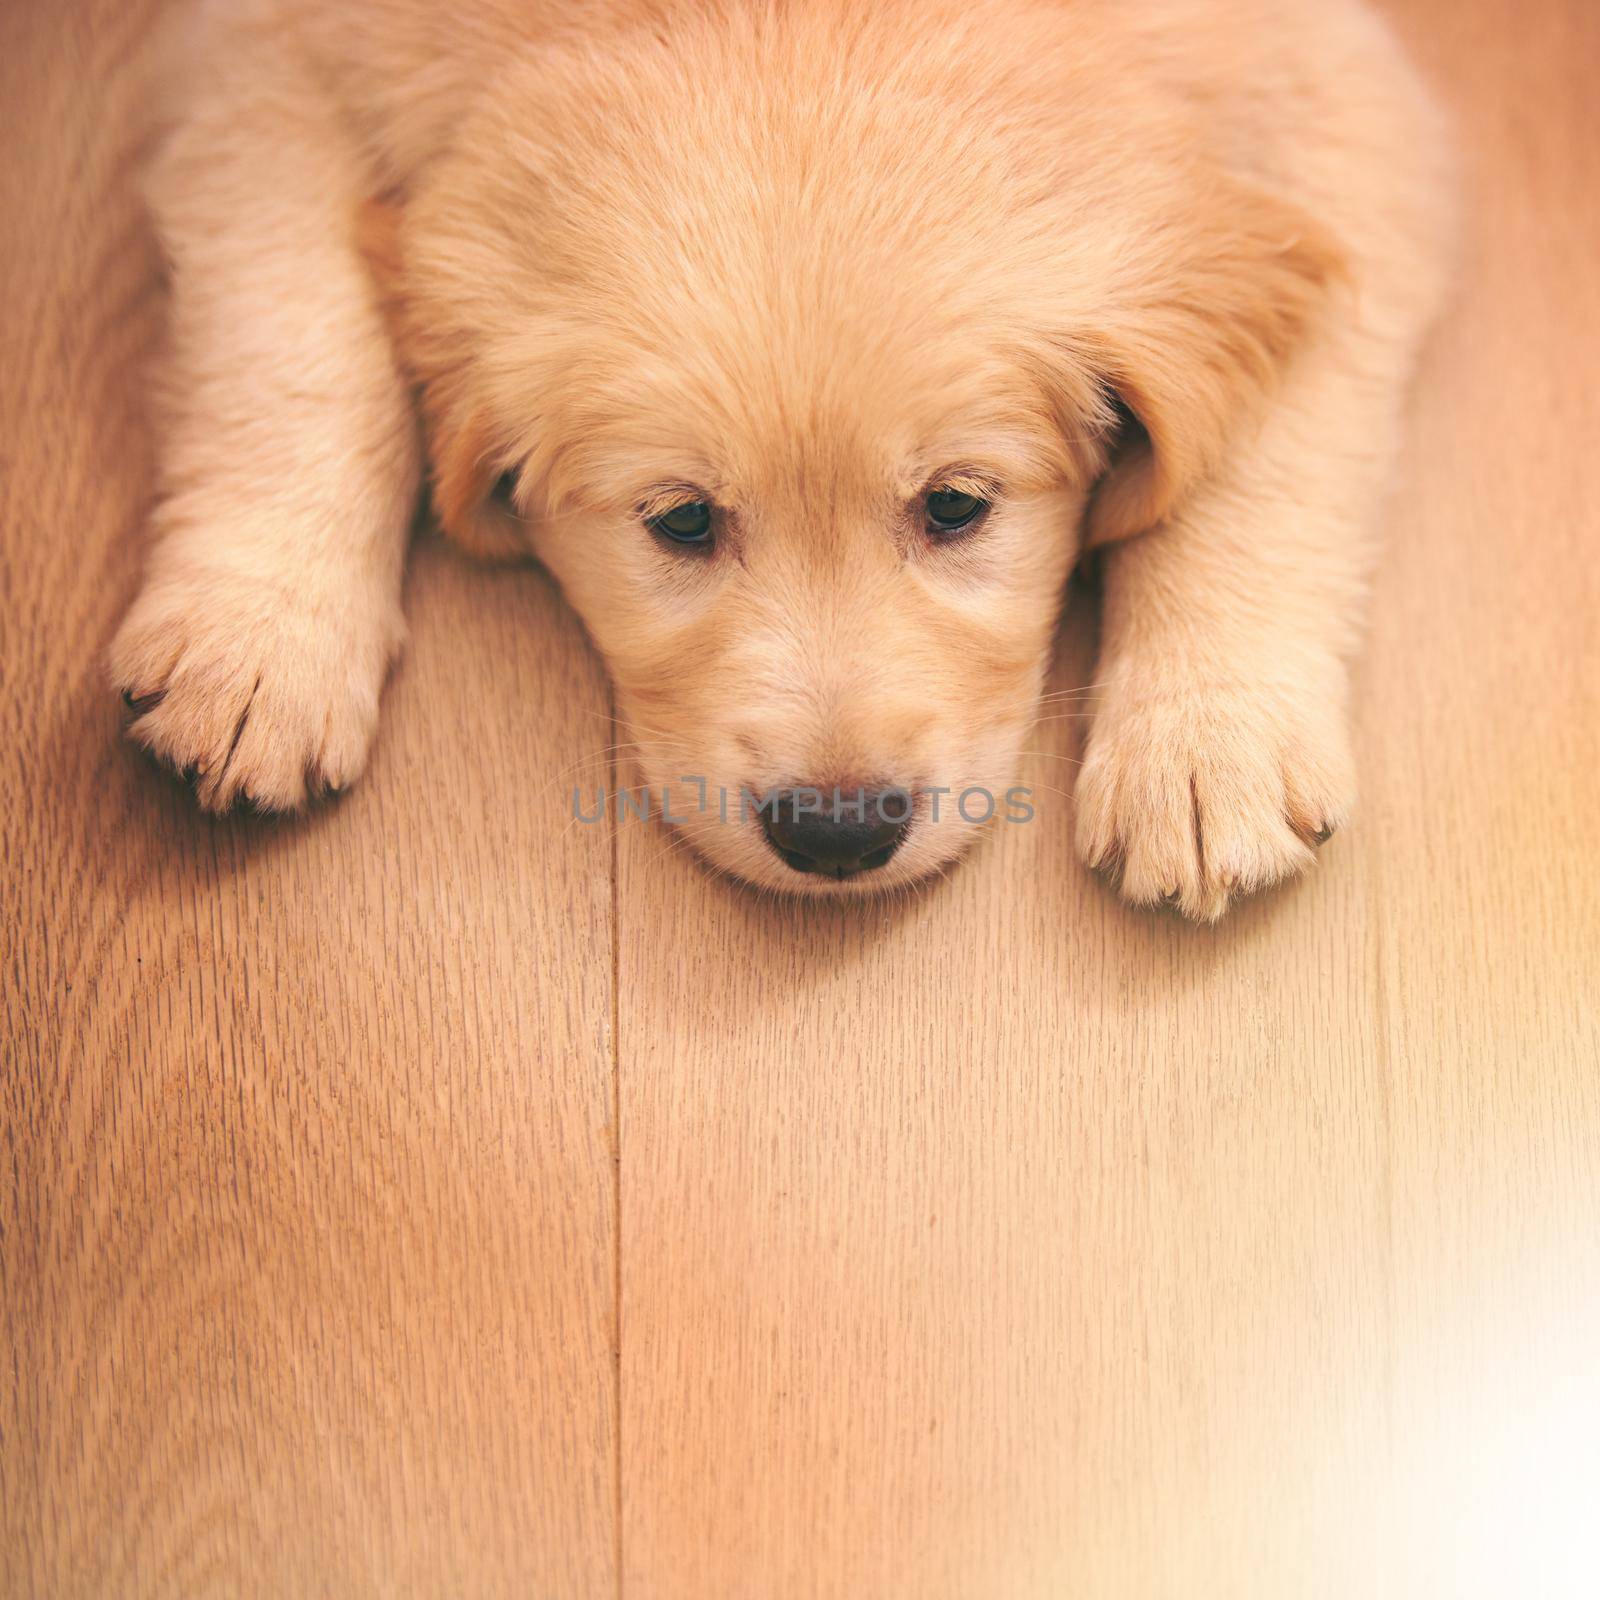 I haz a sad. an adorable golden retriever puppy lying on a wooden floor